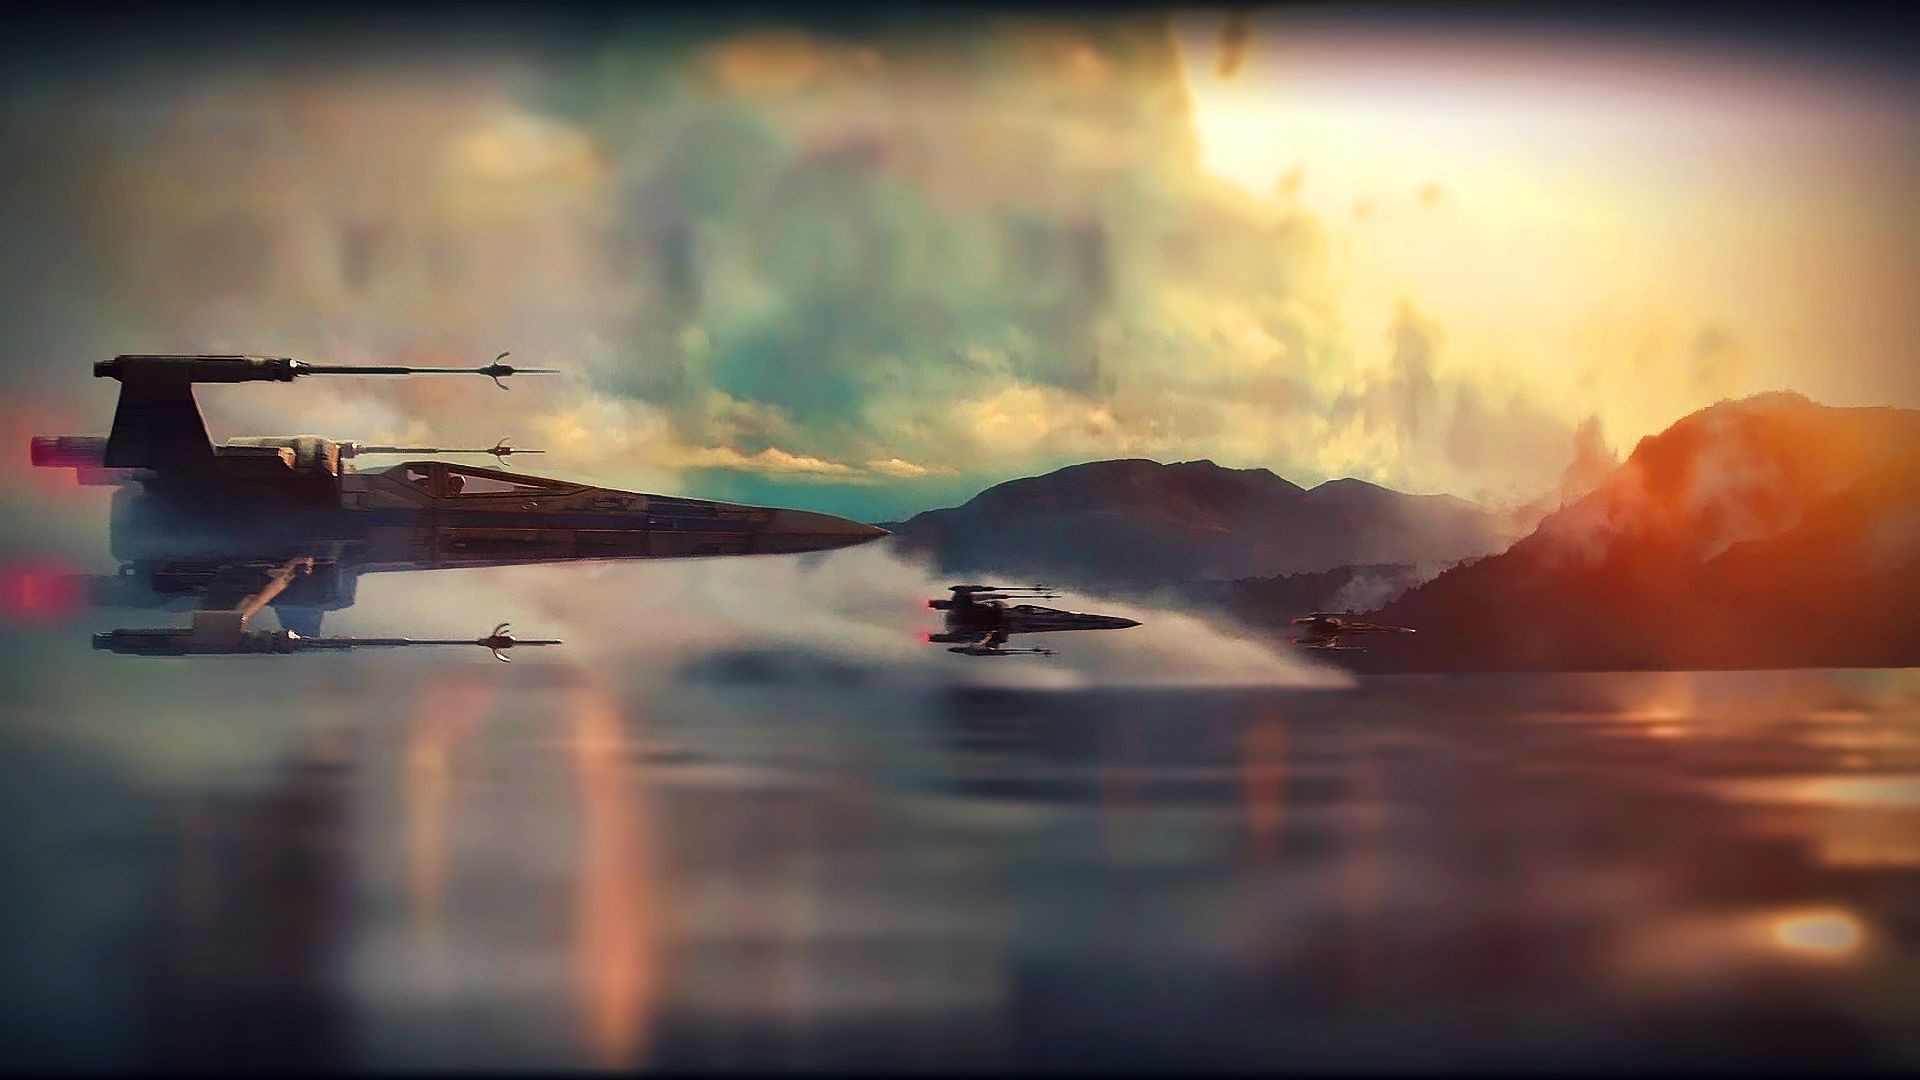 General 1920x1080 Star Wars Star Wars: The Force Awakens X-wing movies film stills science fiction Star Wars Ships